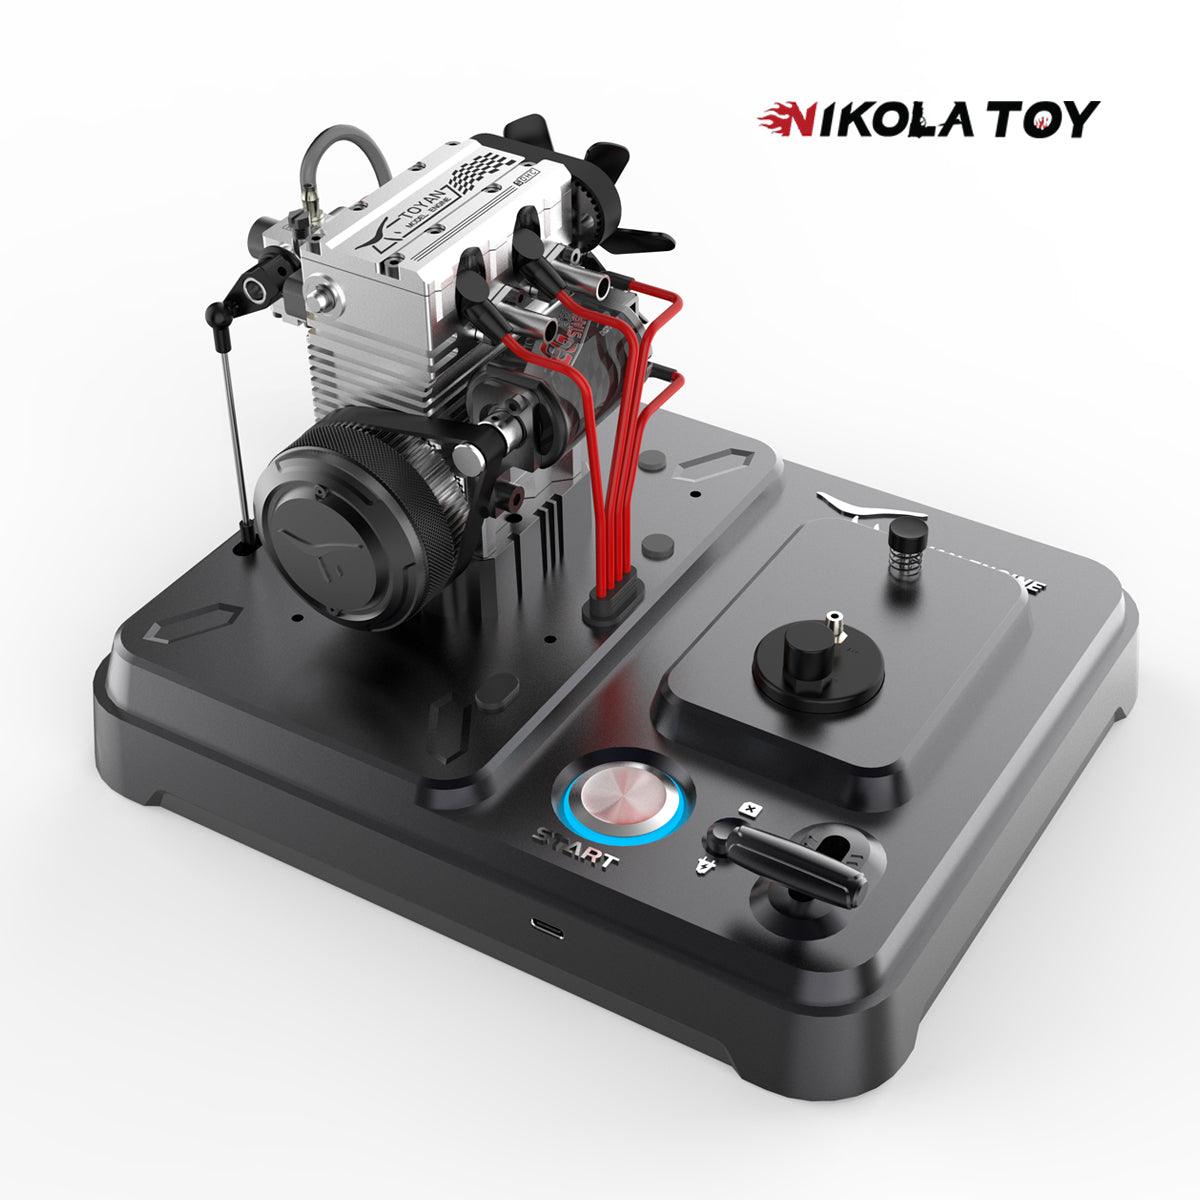 L200 Base+starter kit - Nikola Toy